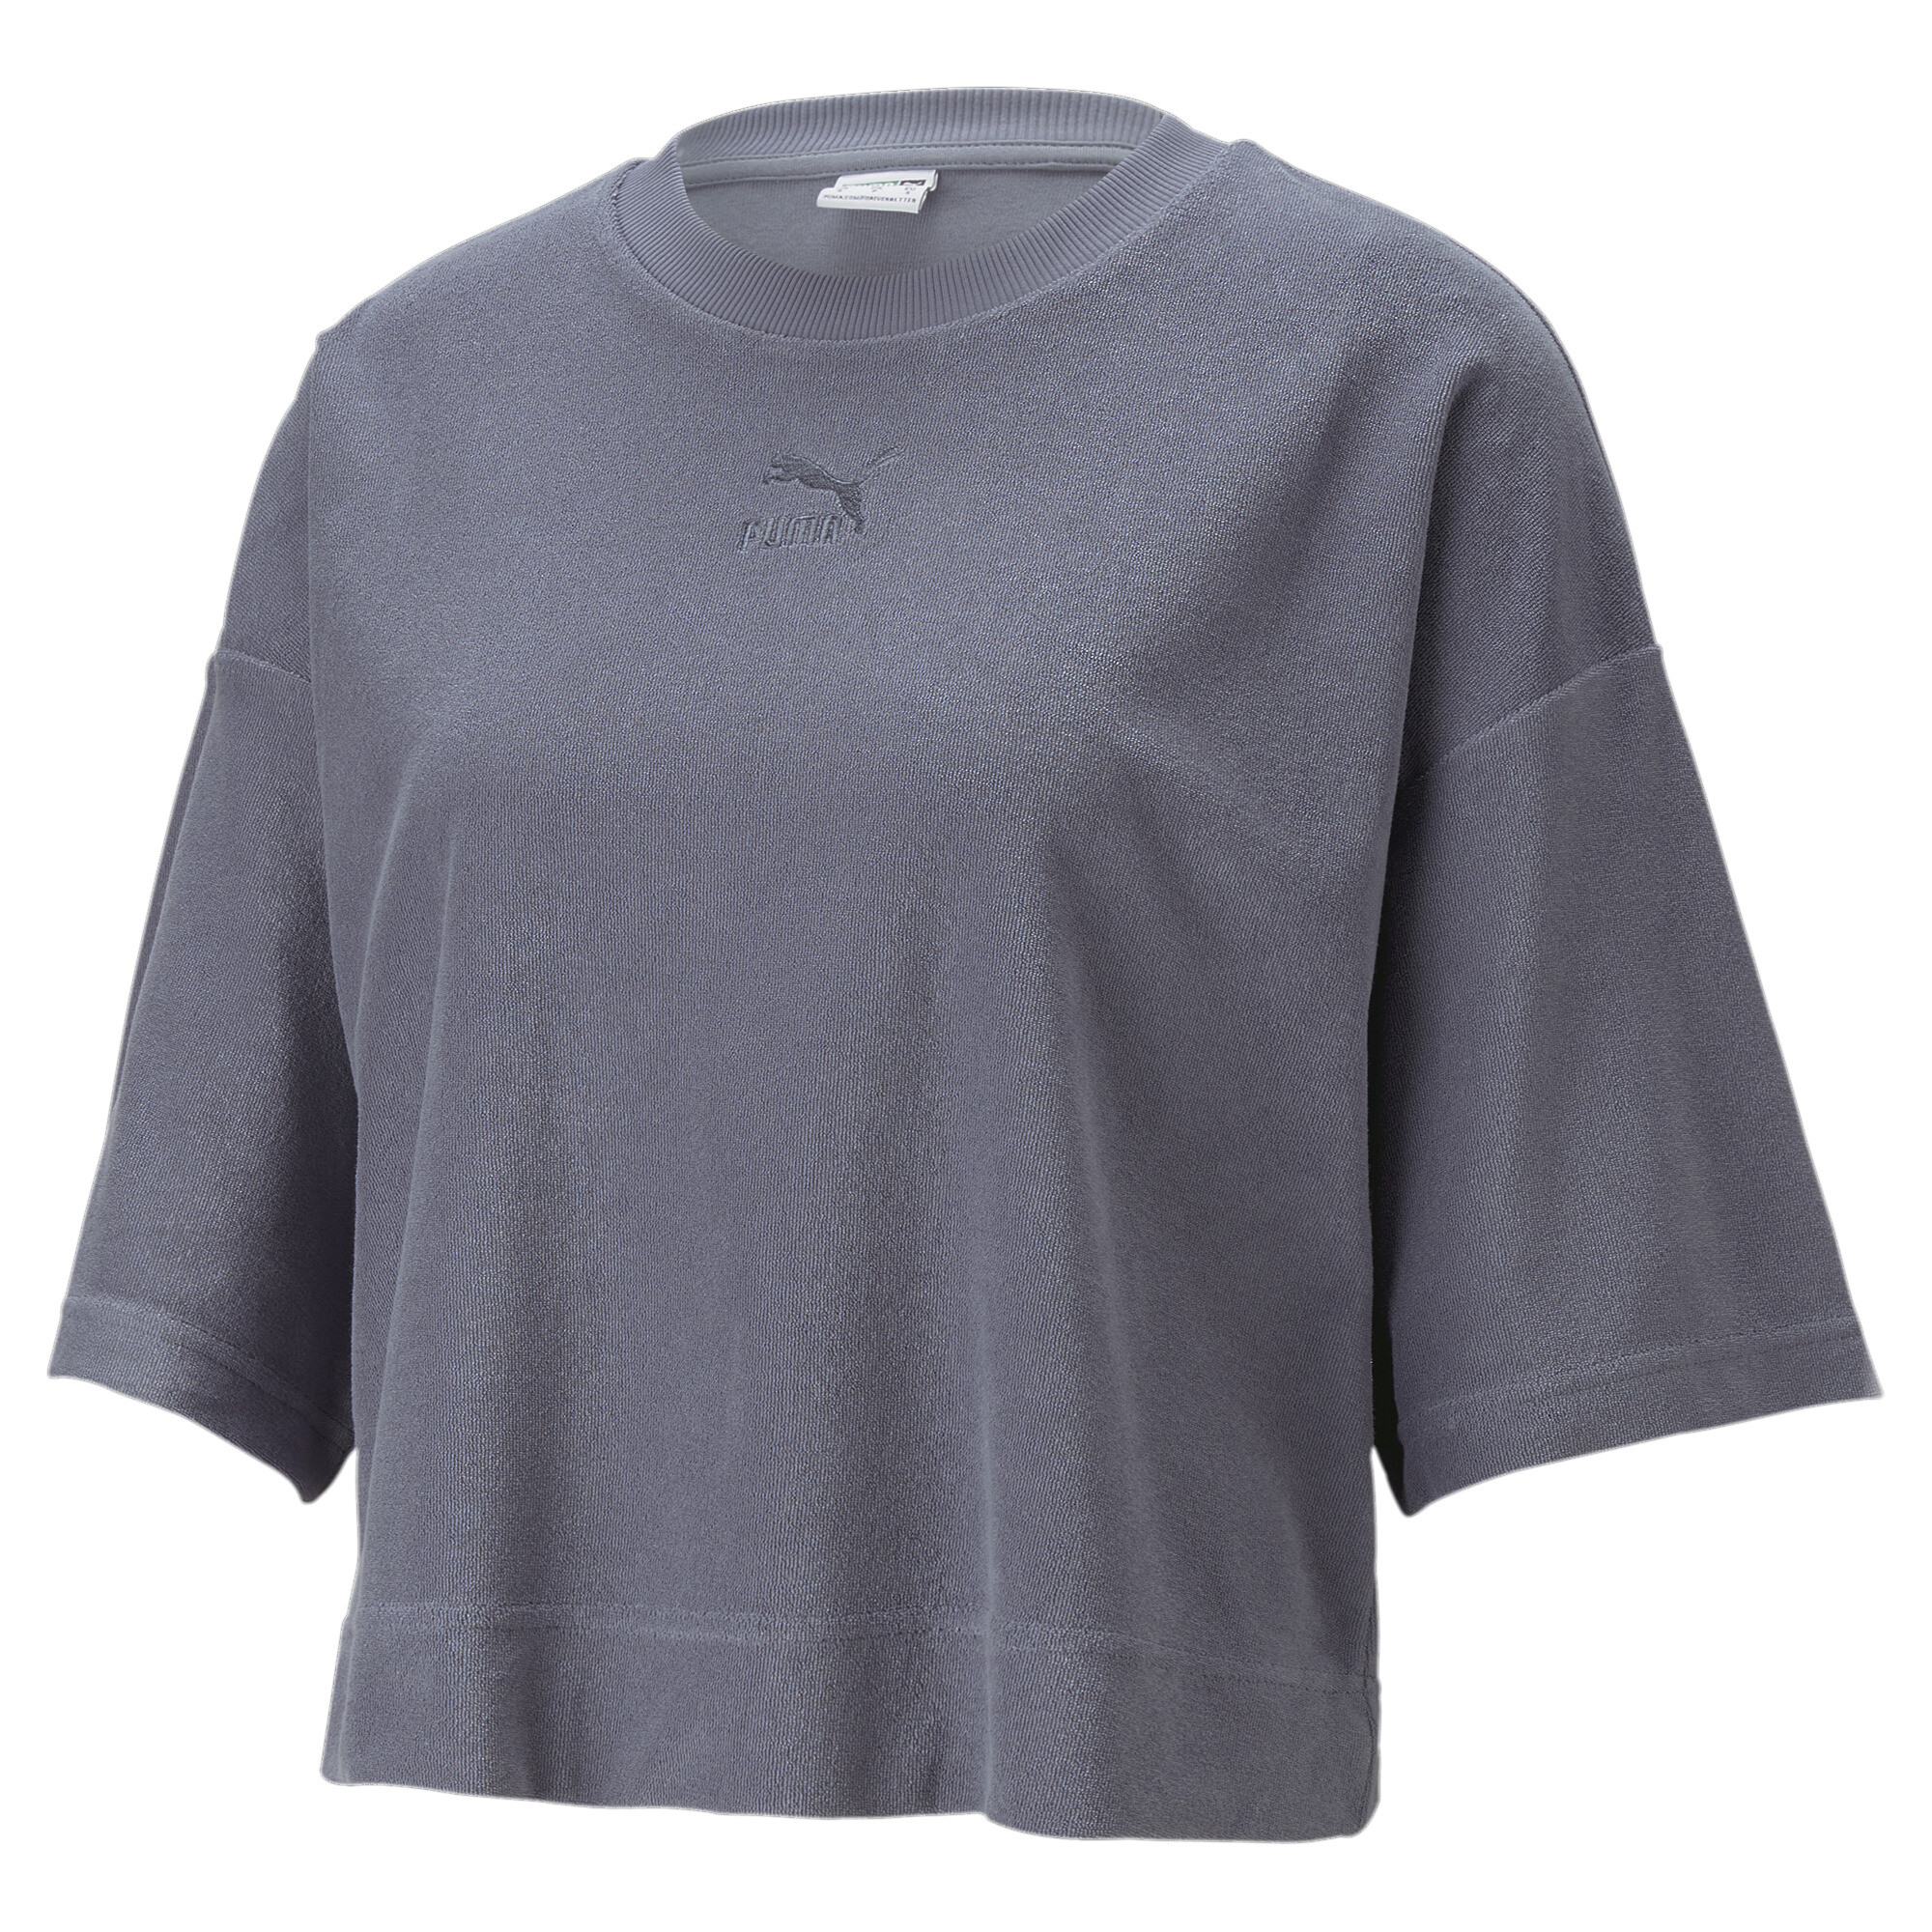 Women's Puma Classics Towelling T-Shirt, Gray, Size S, Clothing